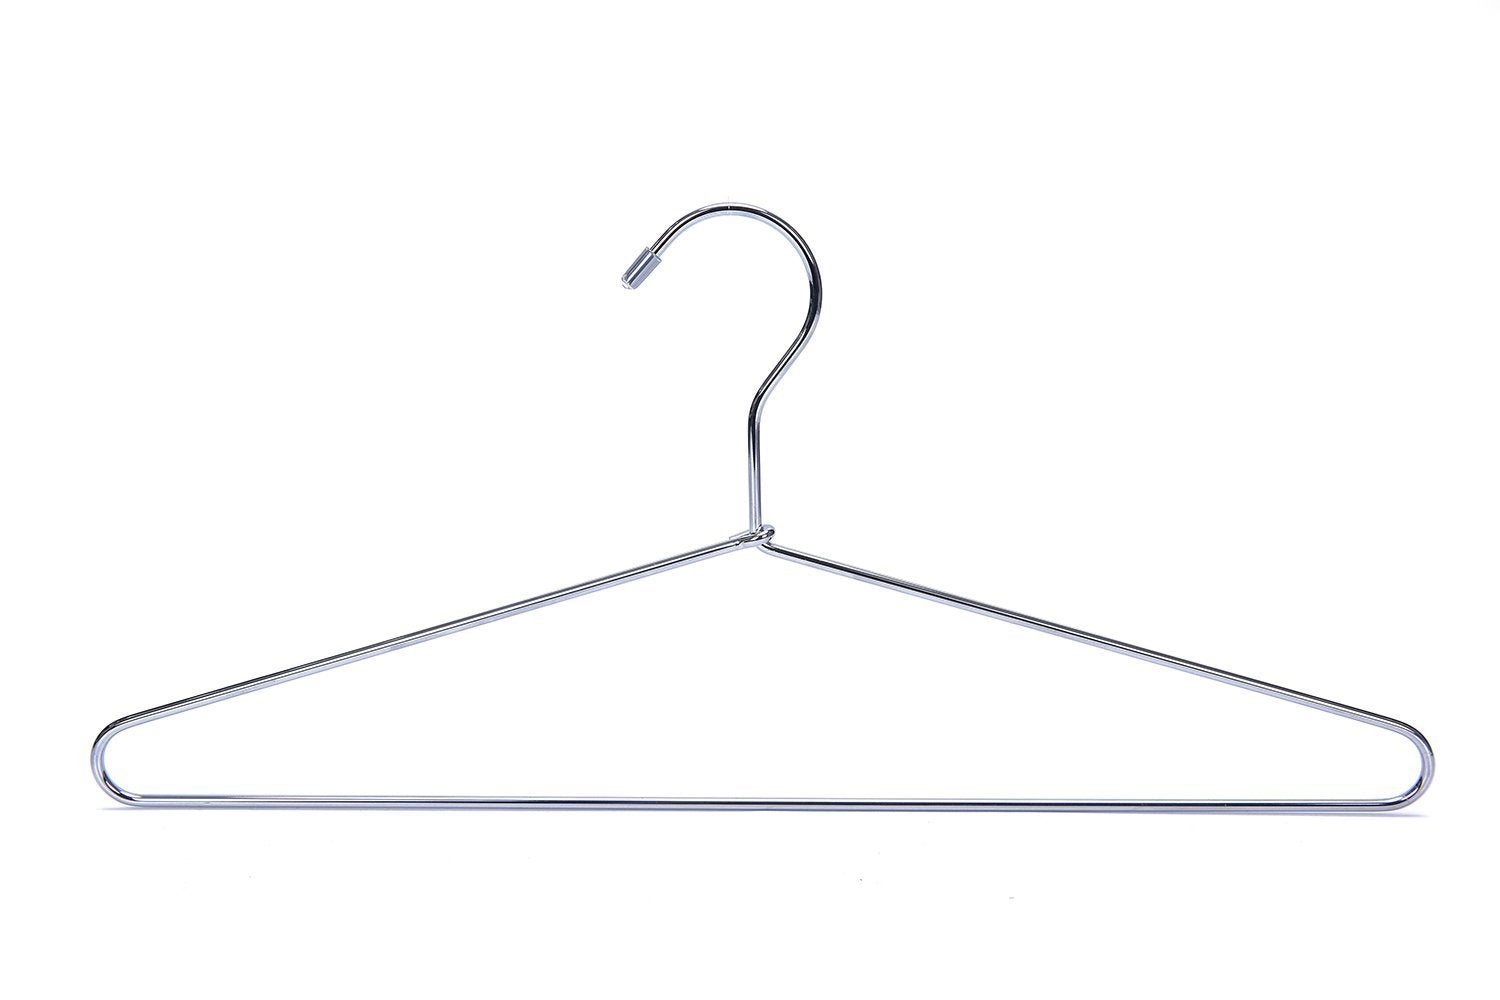 J.S. Hanger Heavy Duty Metal Hanger Suit Coat Hangers with Polished Chrome, Set of 24